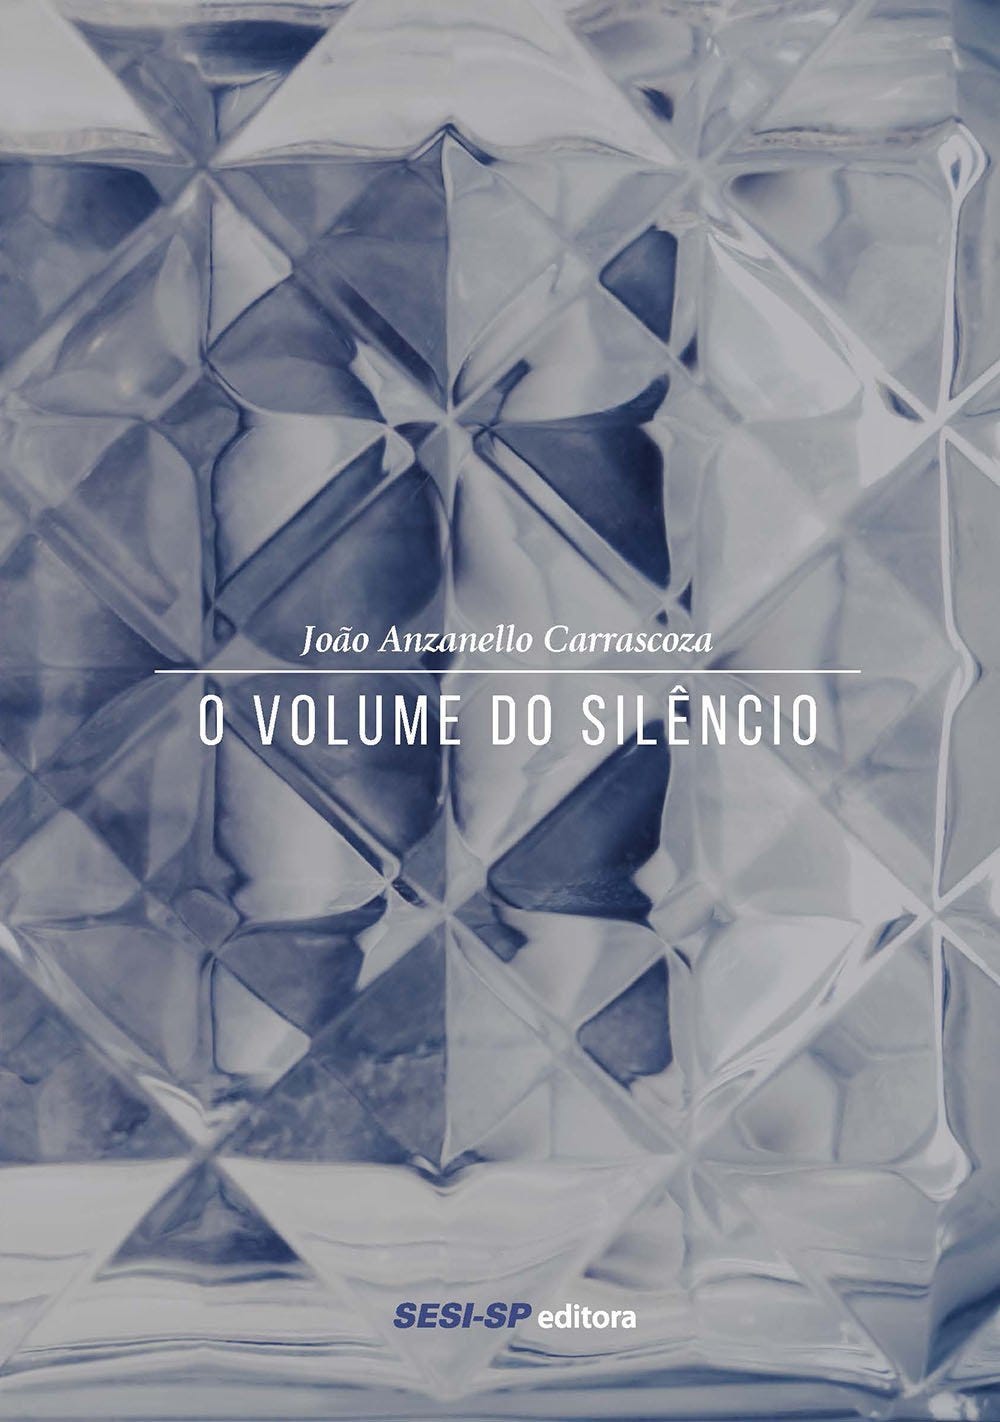 Capa do livro "O volume do silêncio" de João Anzanello Carrascoza. Fundo abstrato em azul e cinza claro, com o nome do autor e o título centralizados na capa. Editora SESI